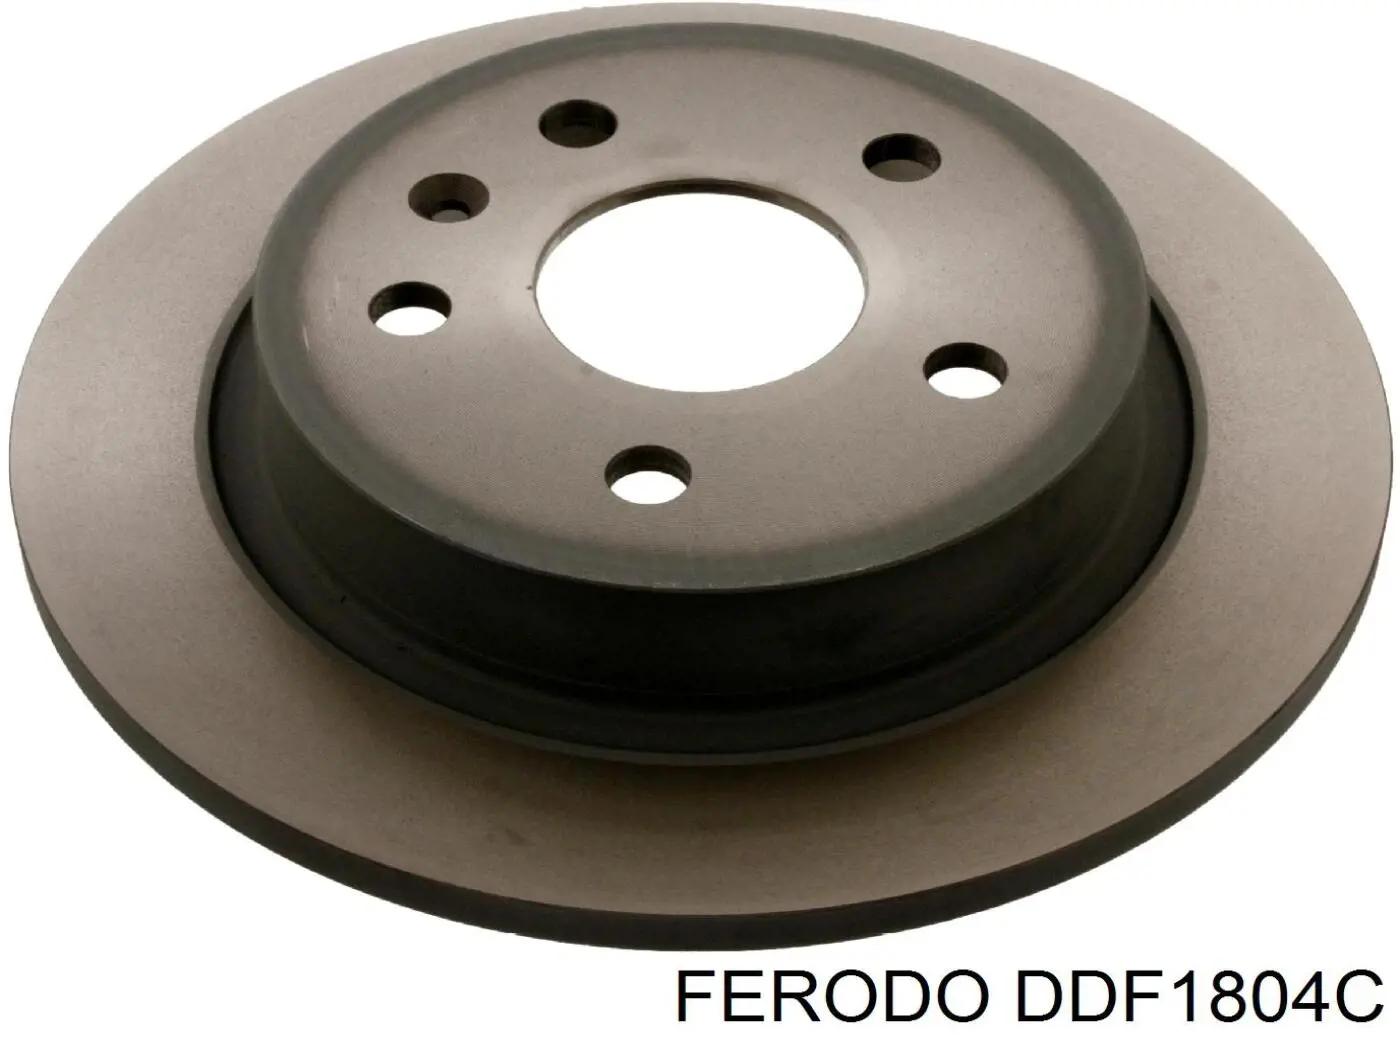 DDF1804C Ferodo disco de freno trasero